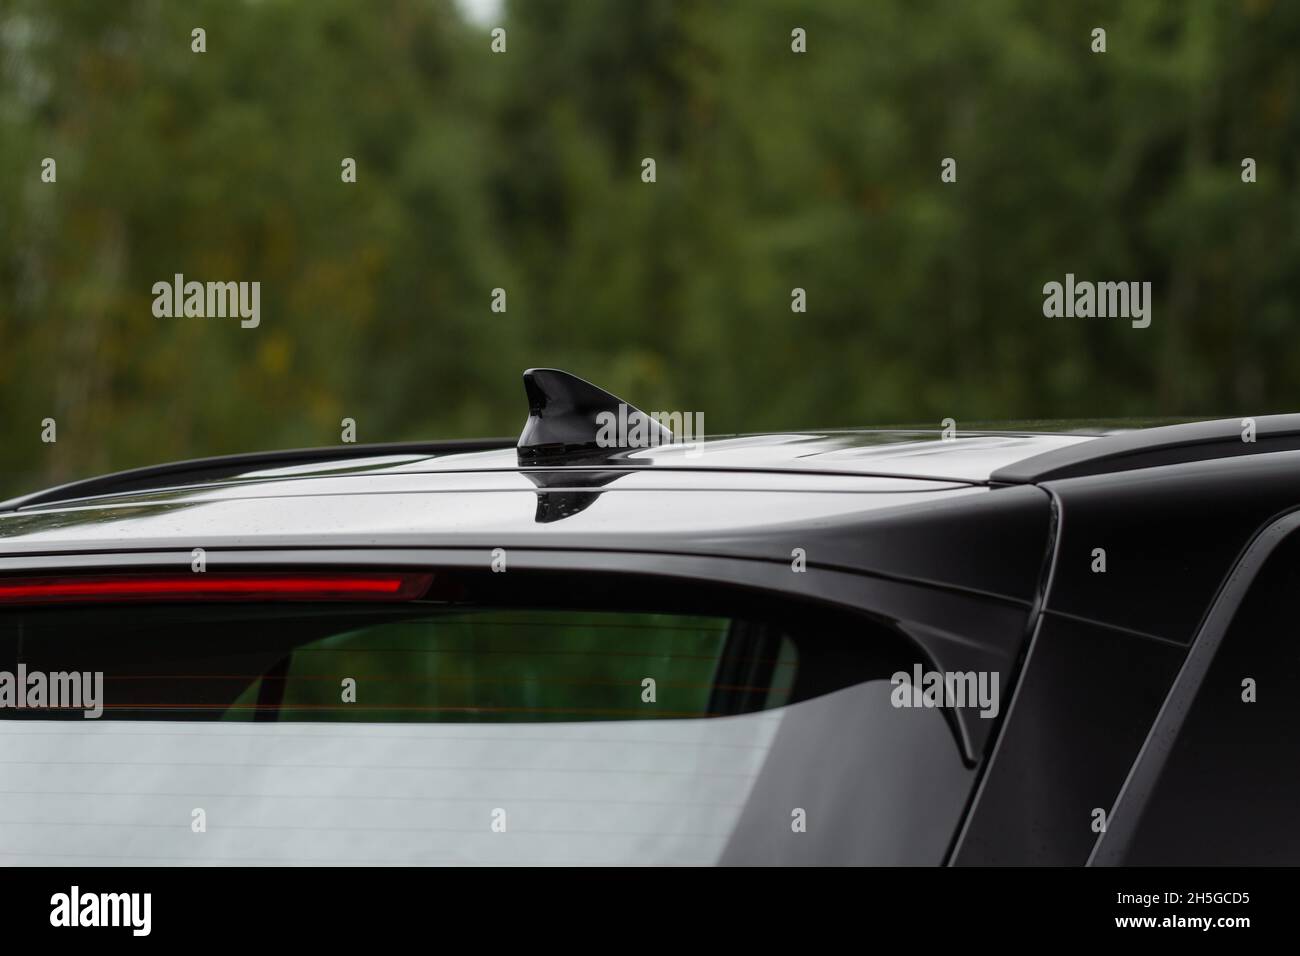 https://c8.alamy.com/comp/2H5GCD5/modern-car-radio-antenna-shark-fin-antenna-modern-car-roof-2H5GCD5.jpg